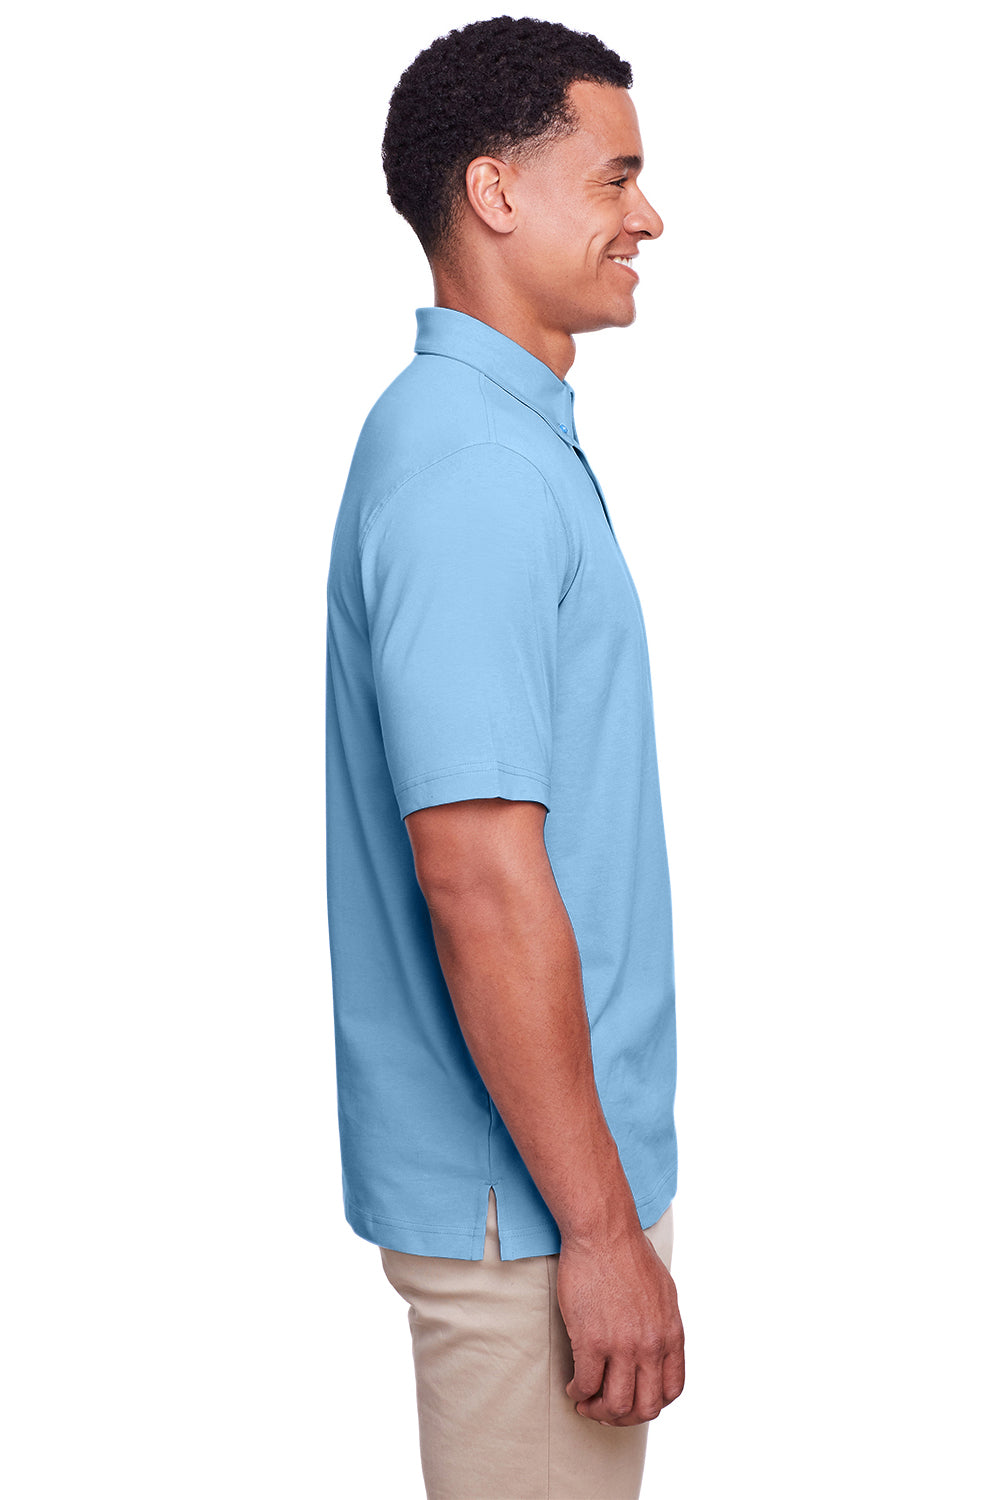 UltraClub UC105 Mens Lakeshore Performance Moisture Wicking Short Sleeve Polo Shirt Columbia Blue Side